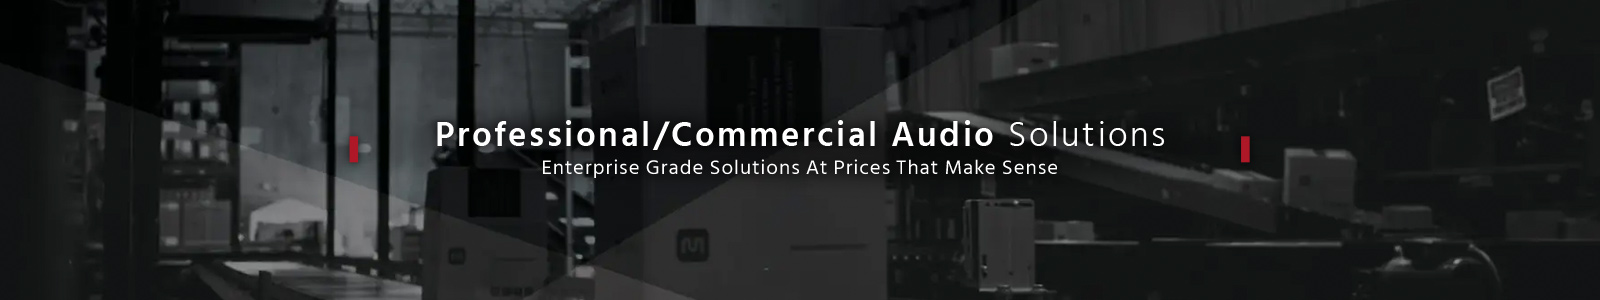 Professional/Commercial Audio Solutions
Enterprise Grade Solutions At Prices That Make Sense
Shop Now